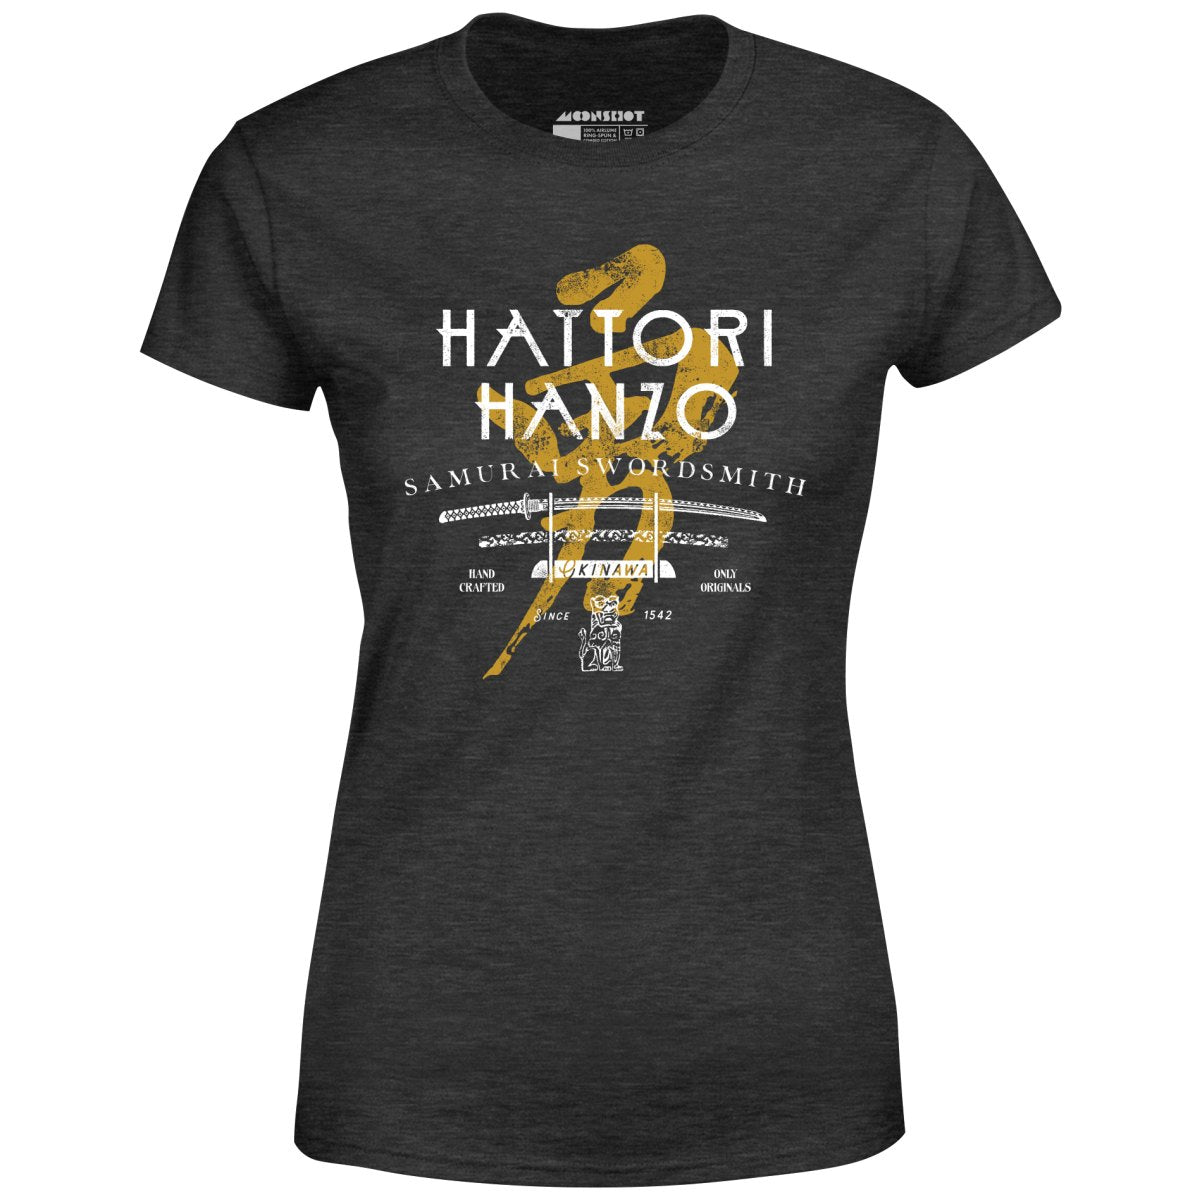 Hattori Hanzo Samurai Swordsmith - Women's T-Shirt